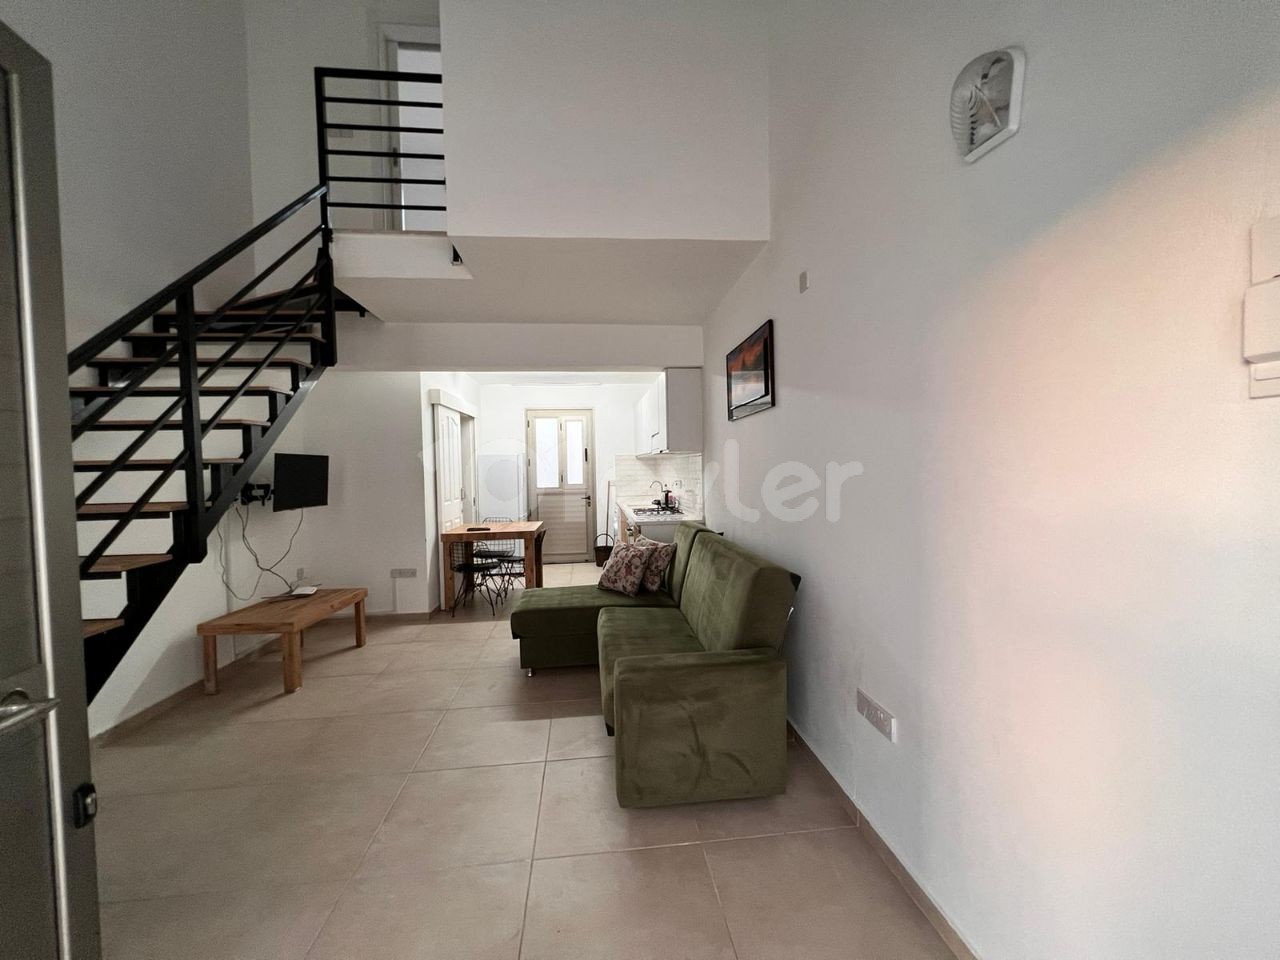 1 bedroom apartment for rent in Kyrenia, Ozankoy